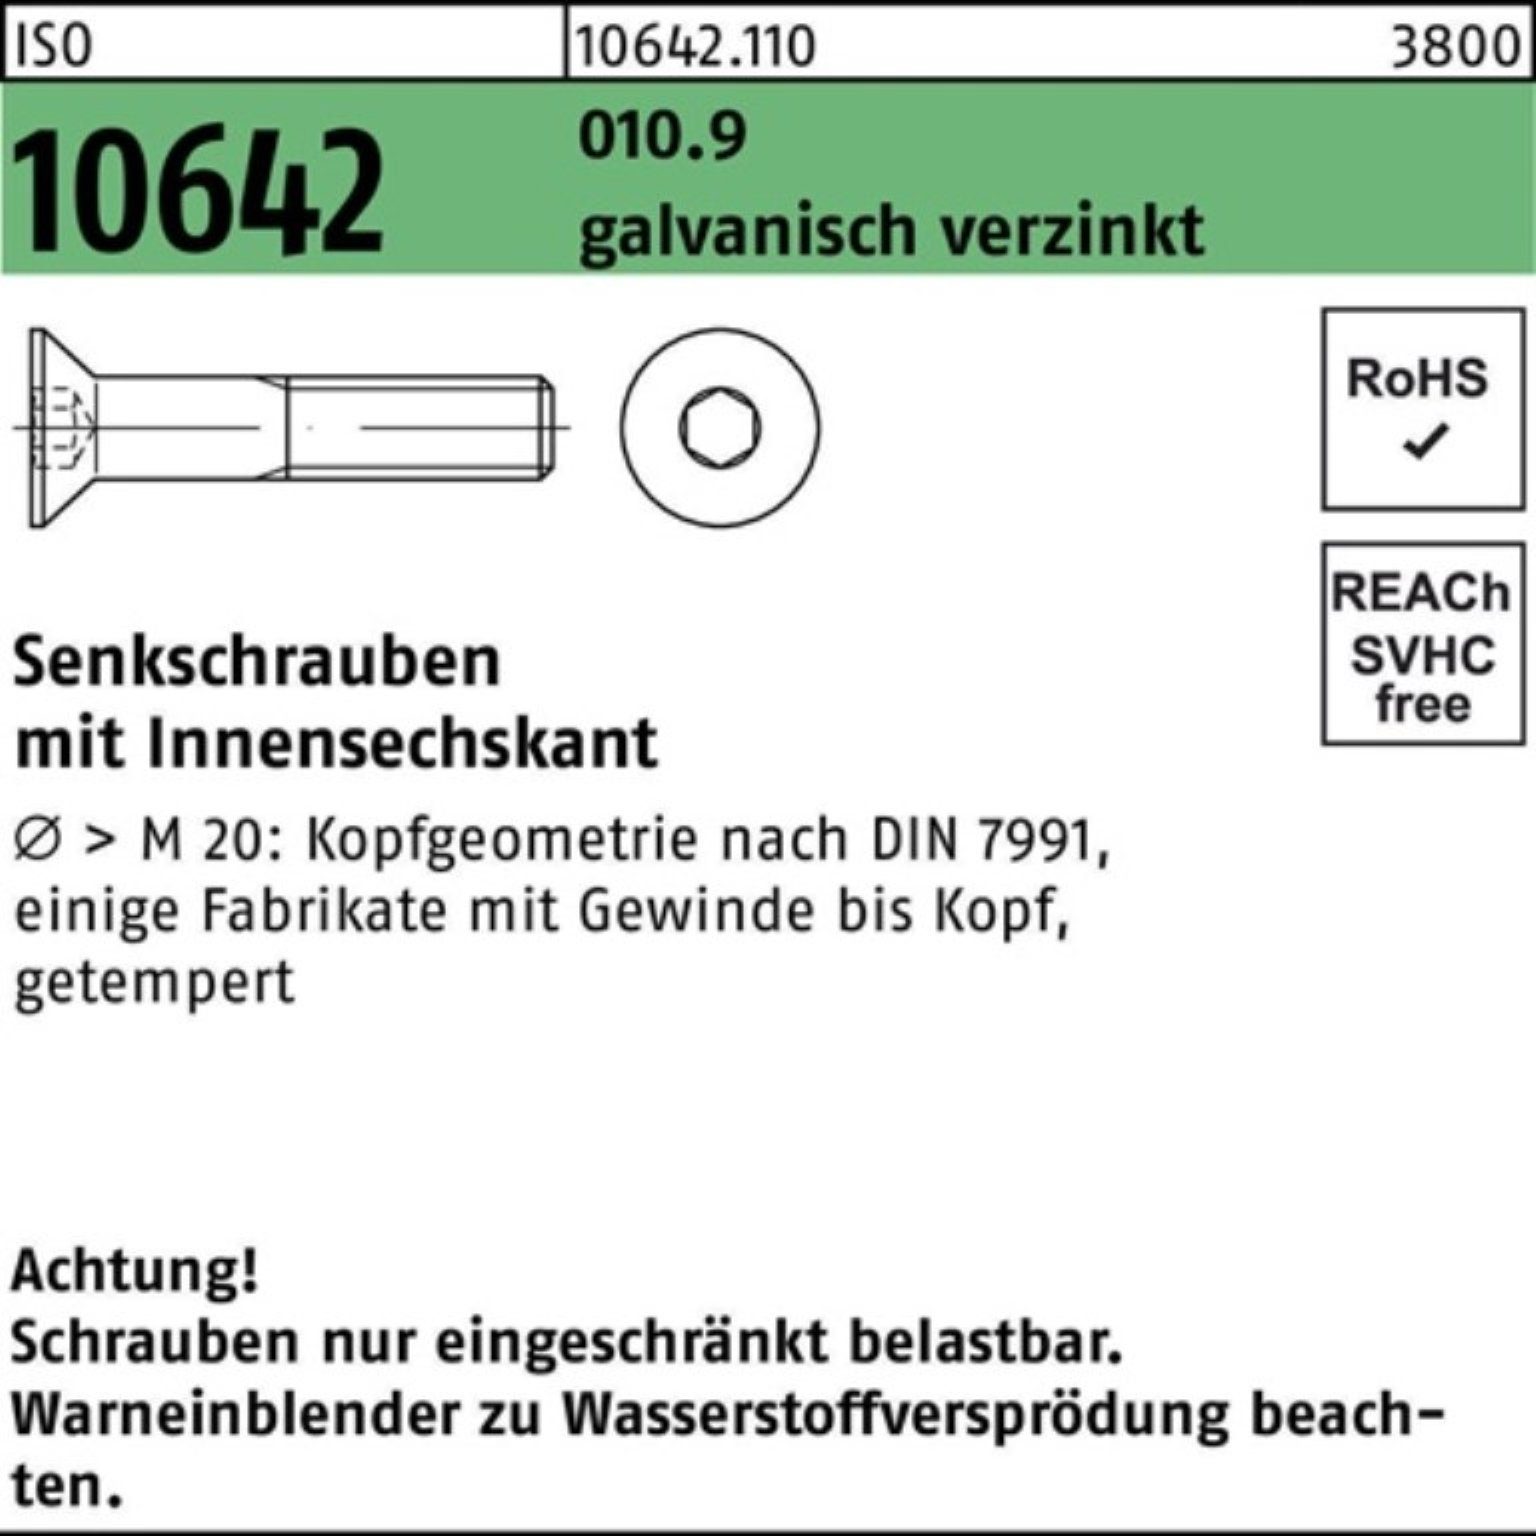 Reyher Senkschraube 500er Pack Senkschraube ISO 10642 Innen-6kt M6x 14 010.9 galv.verz. 50